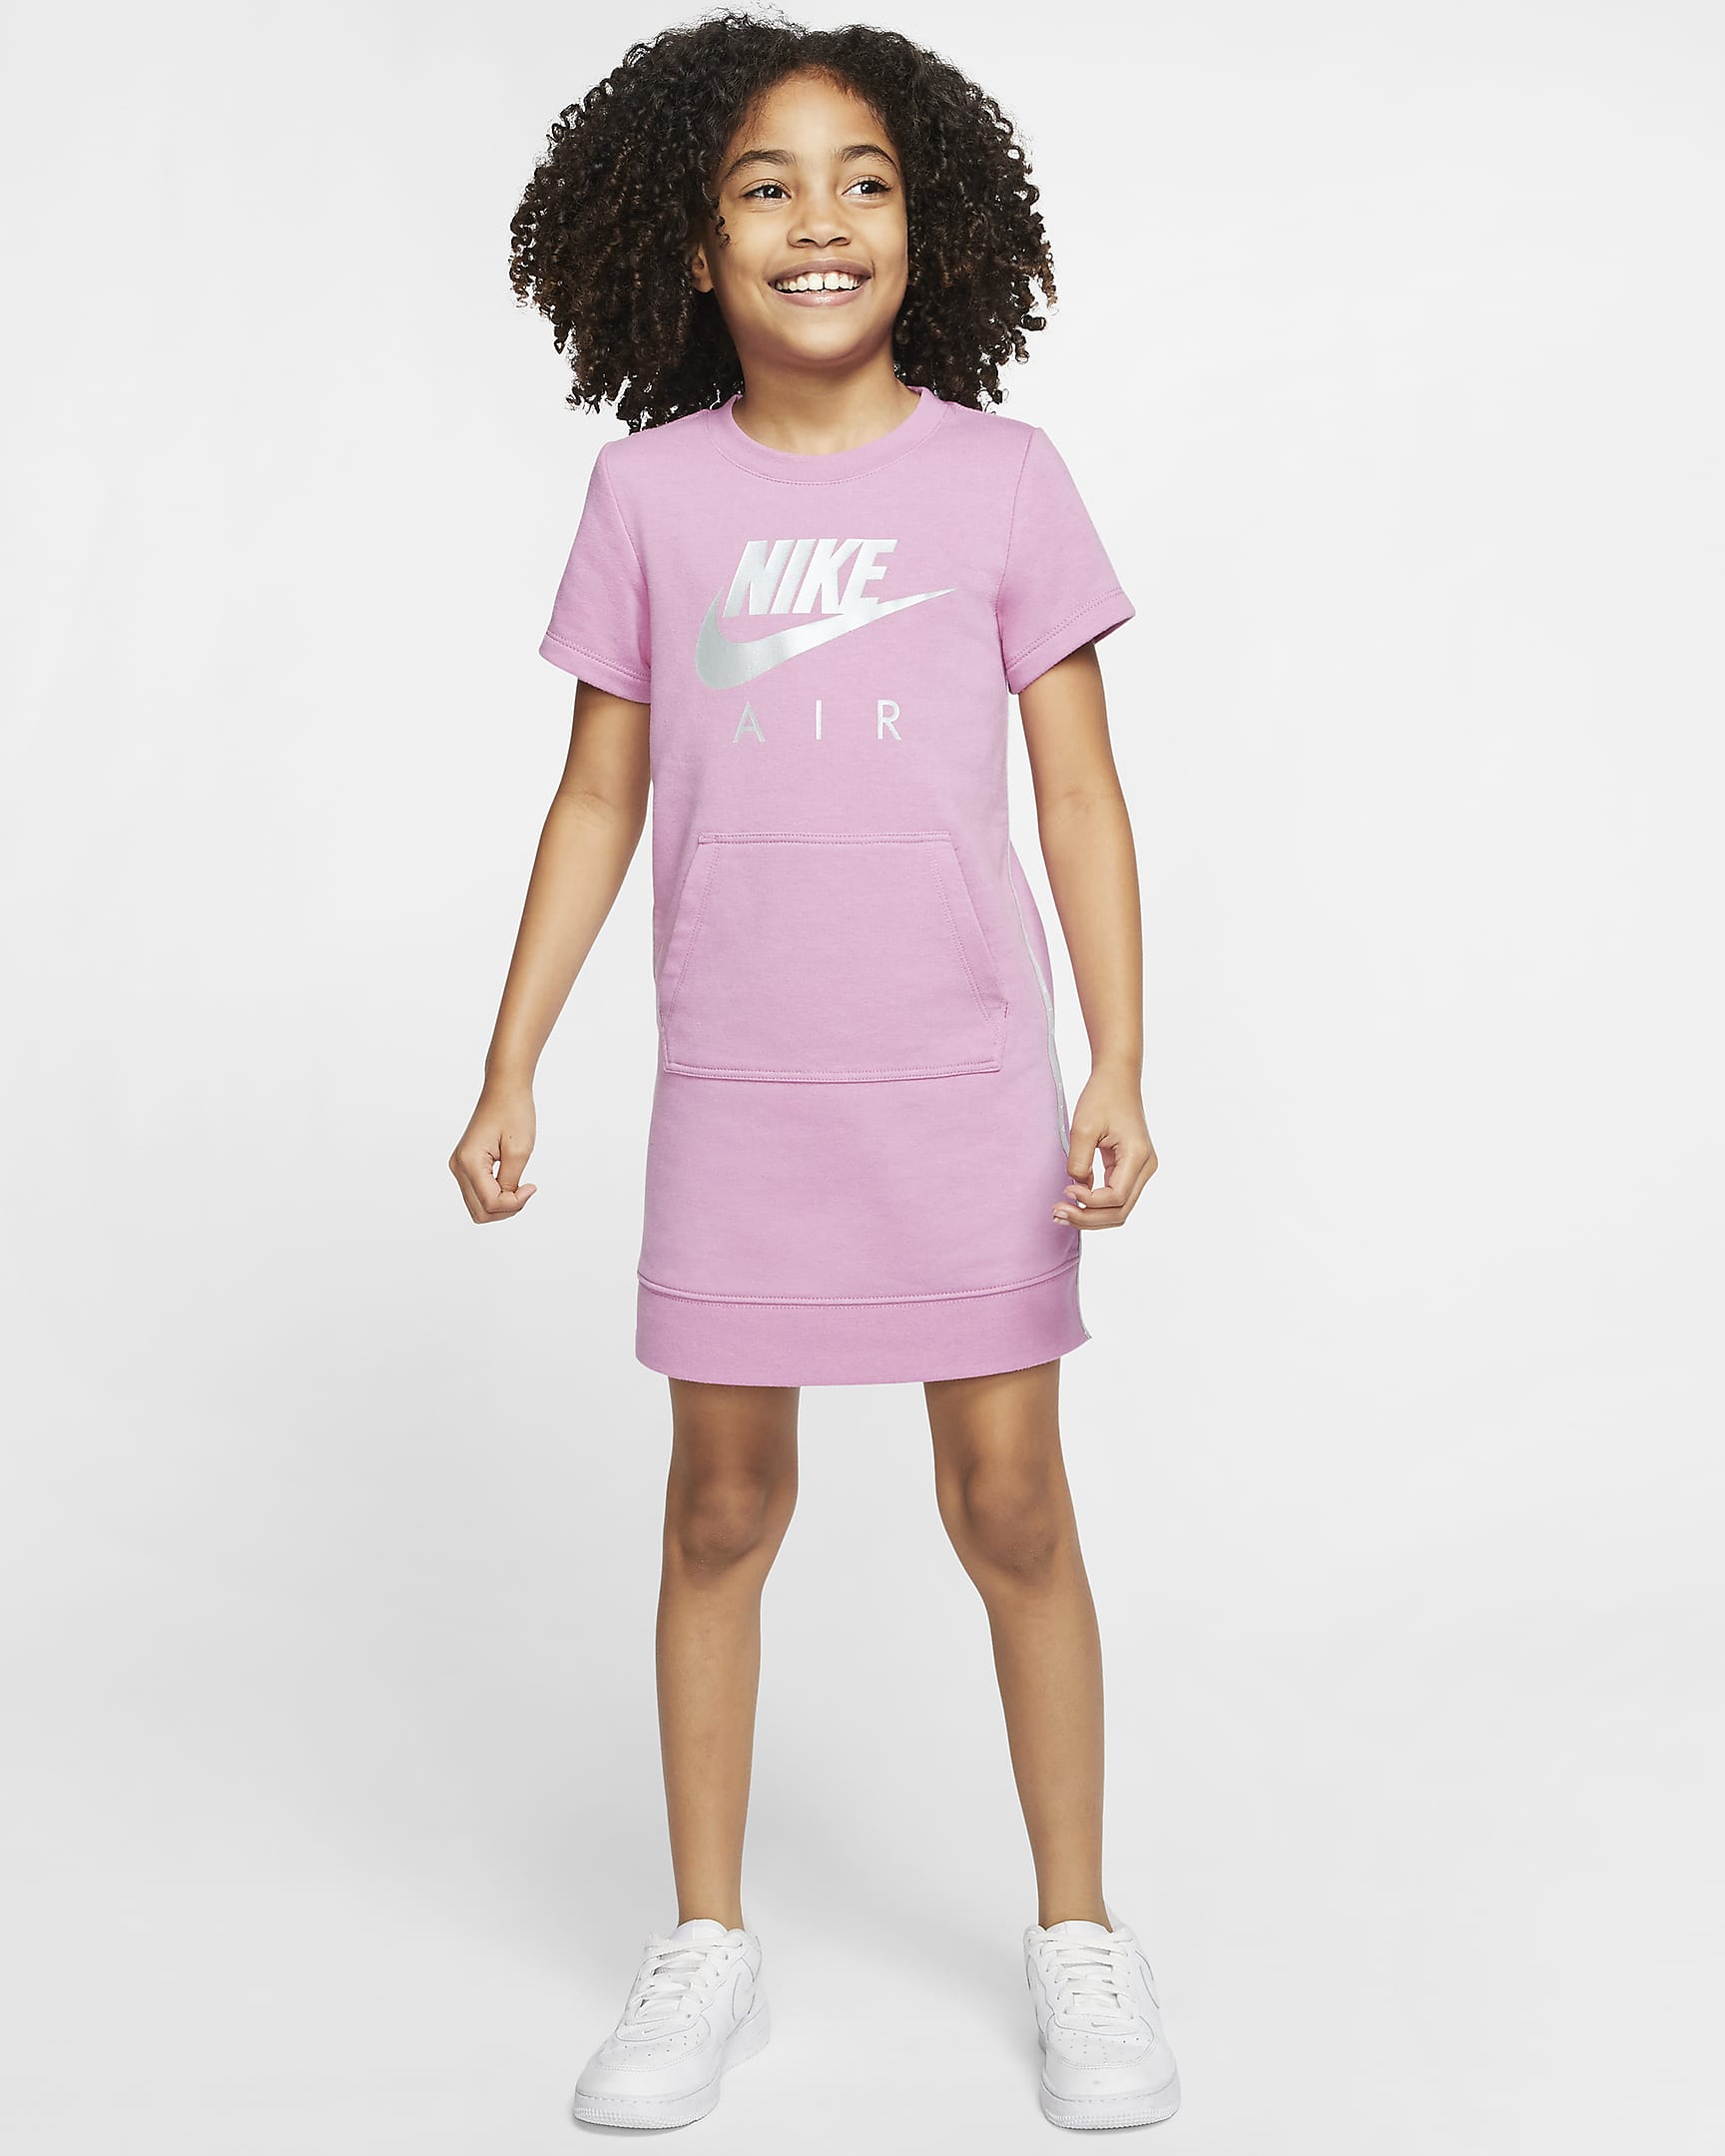 Nike Air Little Kids' Dress. Nike.com